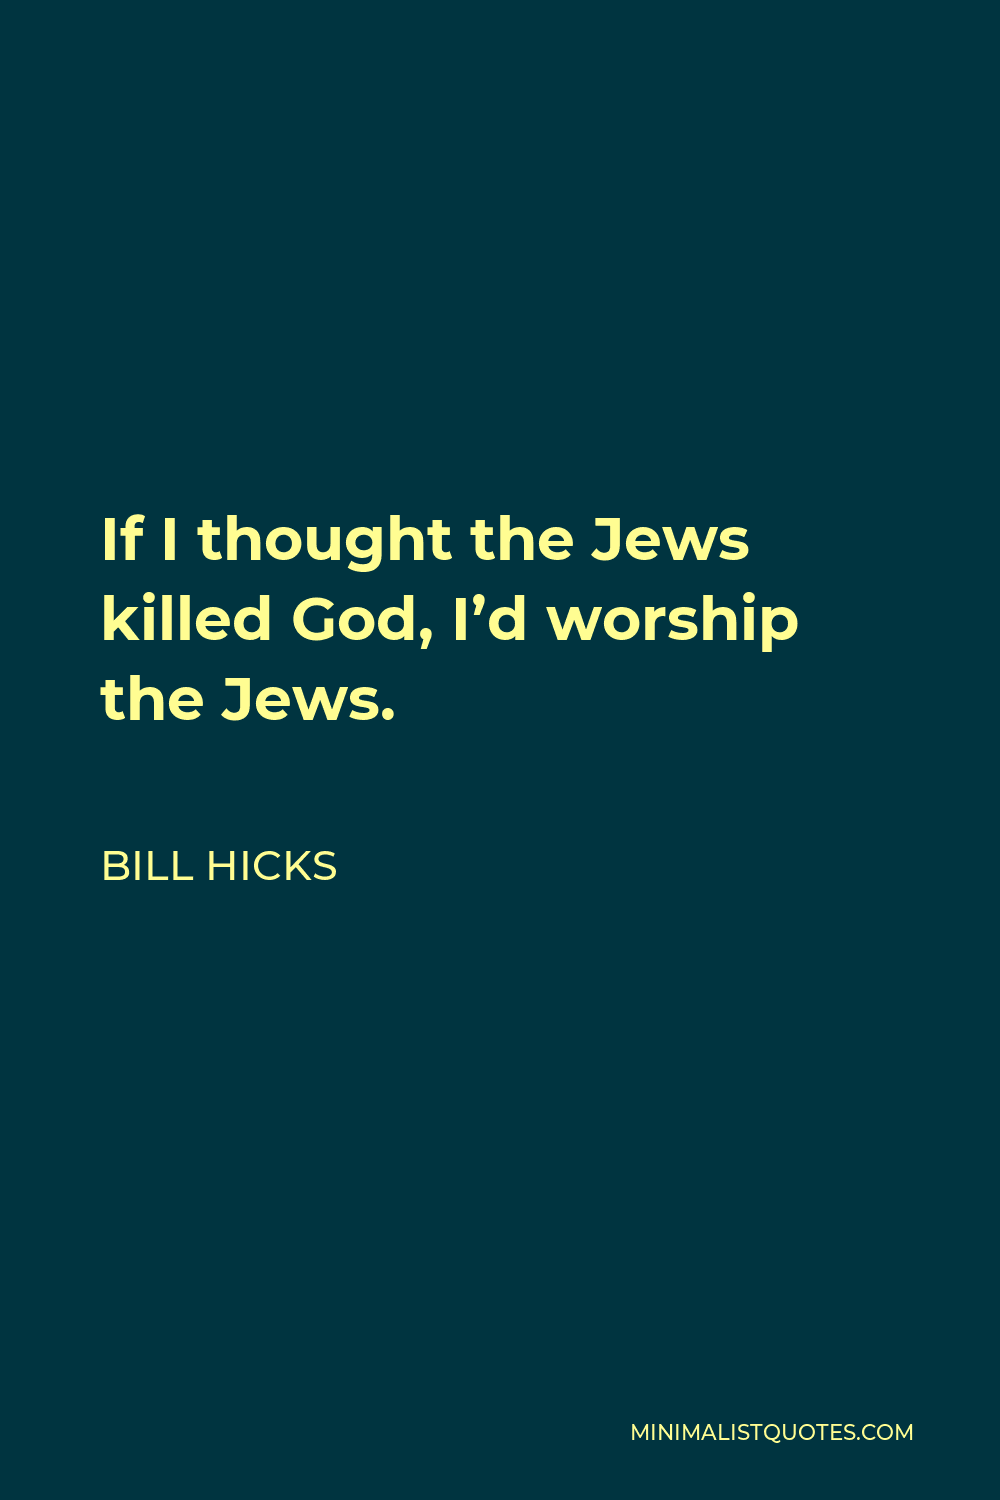 Bill Hicks Quote - If I thought the Jews killed God, I’d worship the Jews.